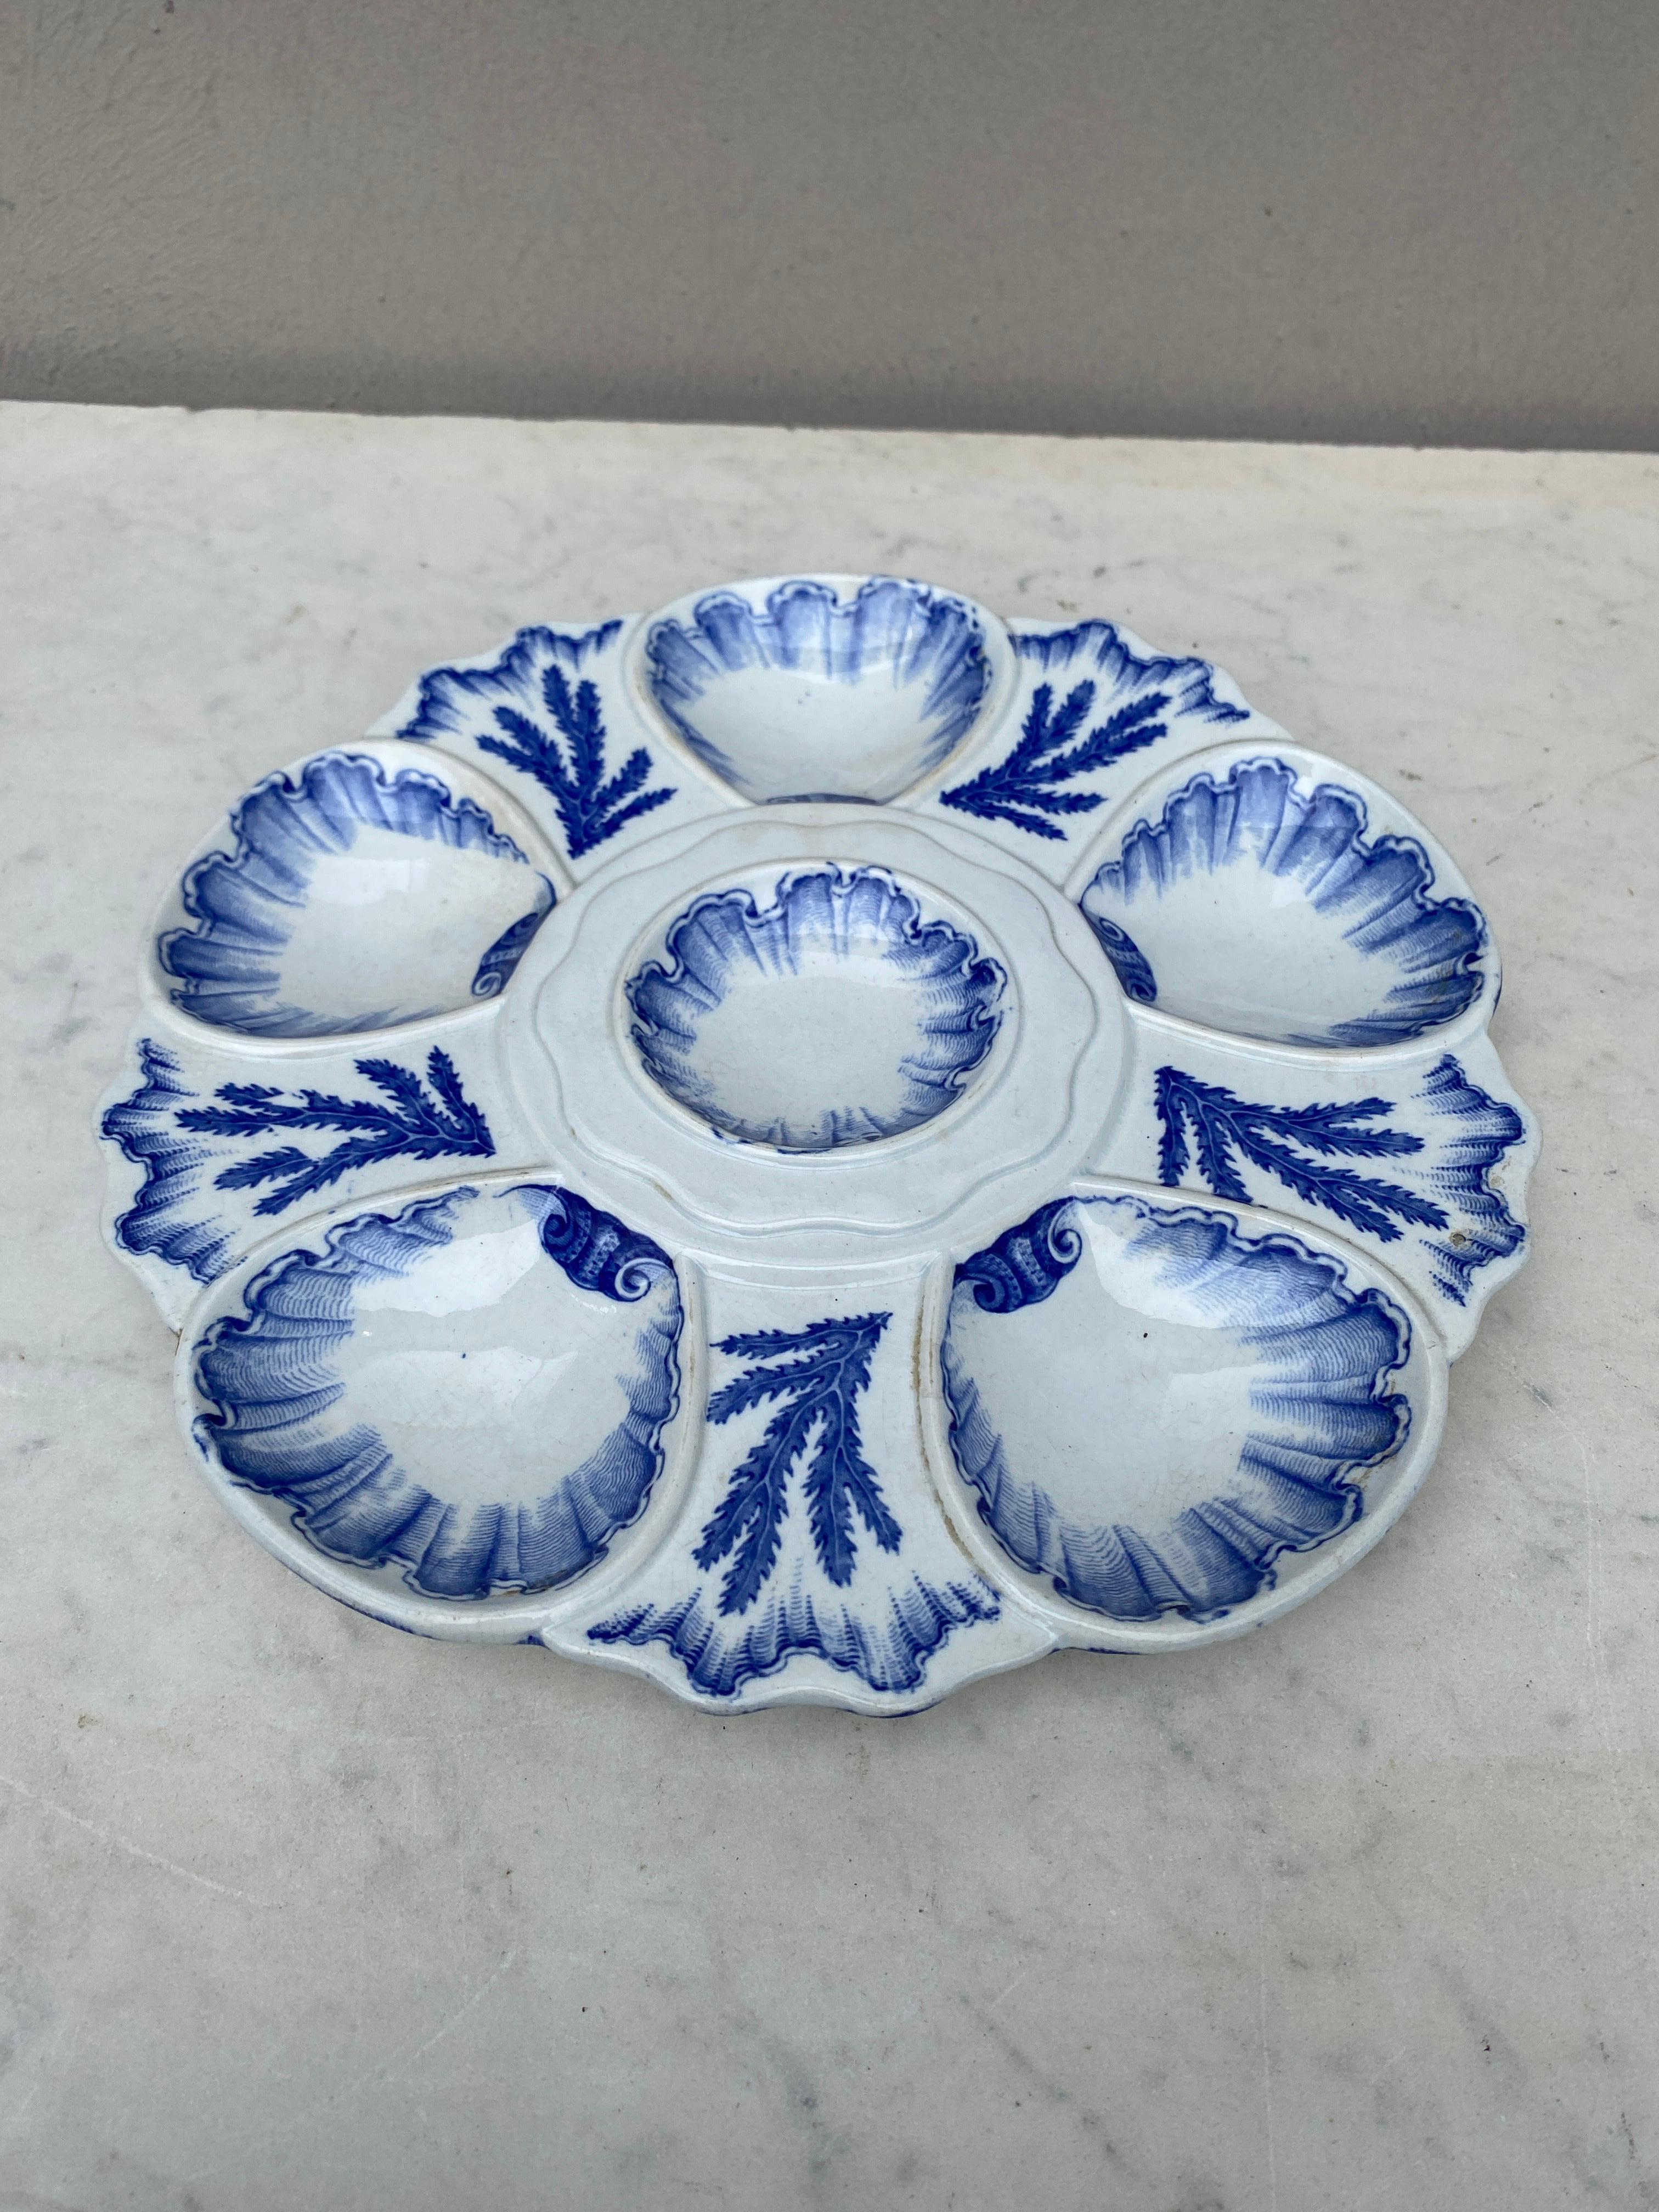 Elegante plato de ostras azul y blanco firmado Bordeaux Vieillard, hacia 1890.
Seis pozos rodeados de algas azules de distintos tipos.